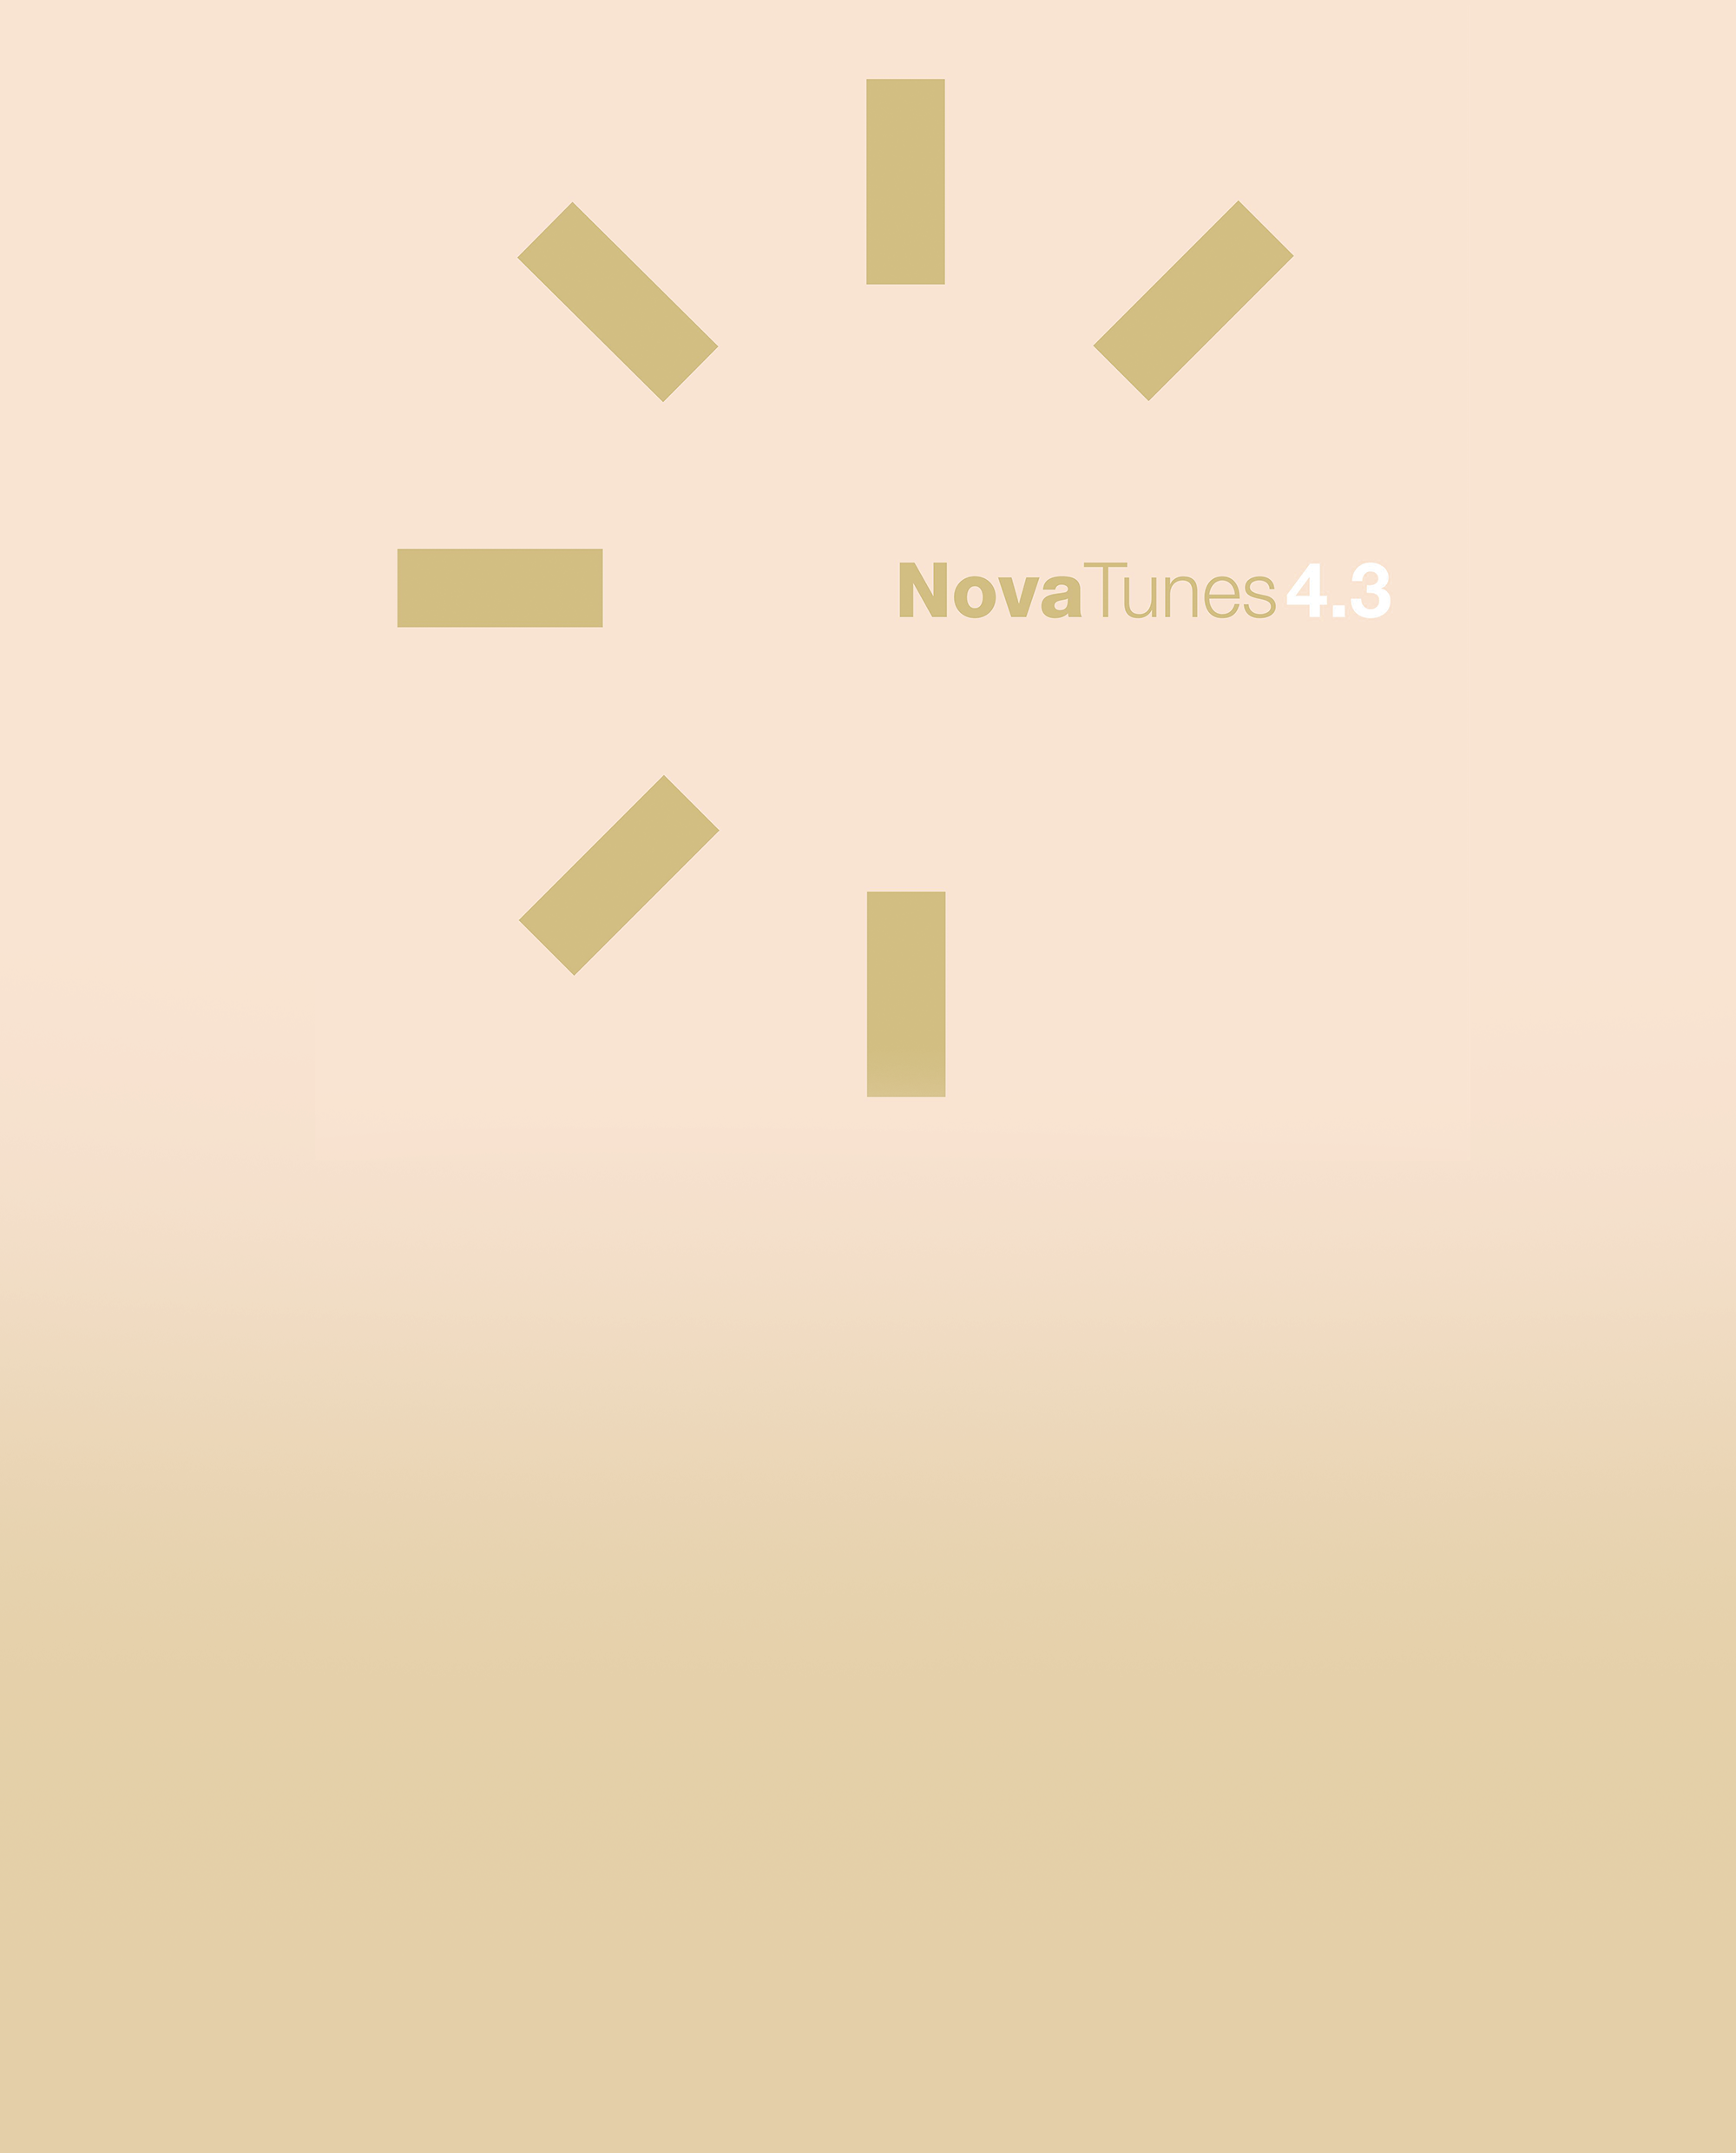 NovaTunes 4.3